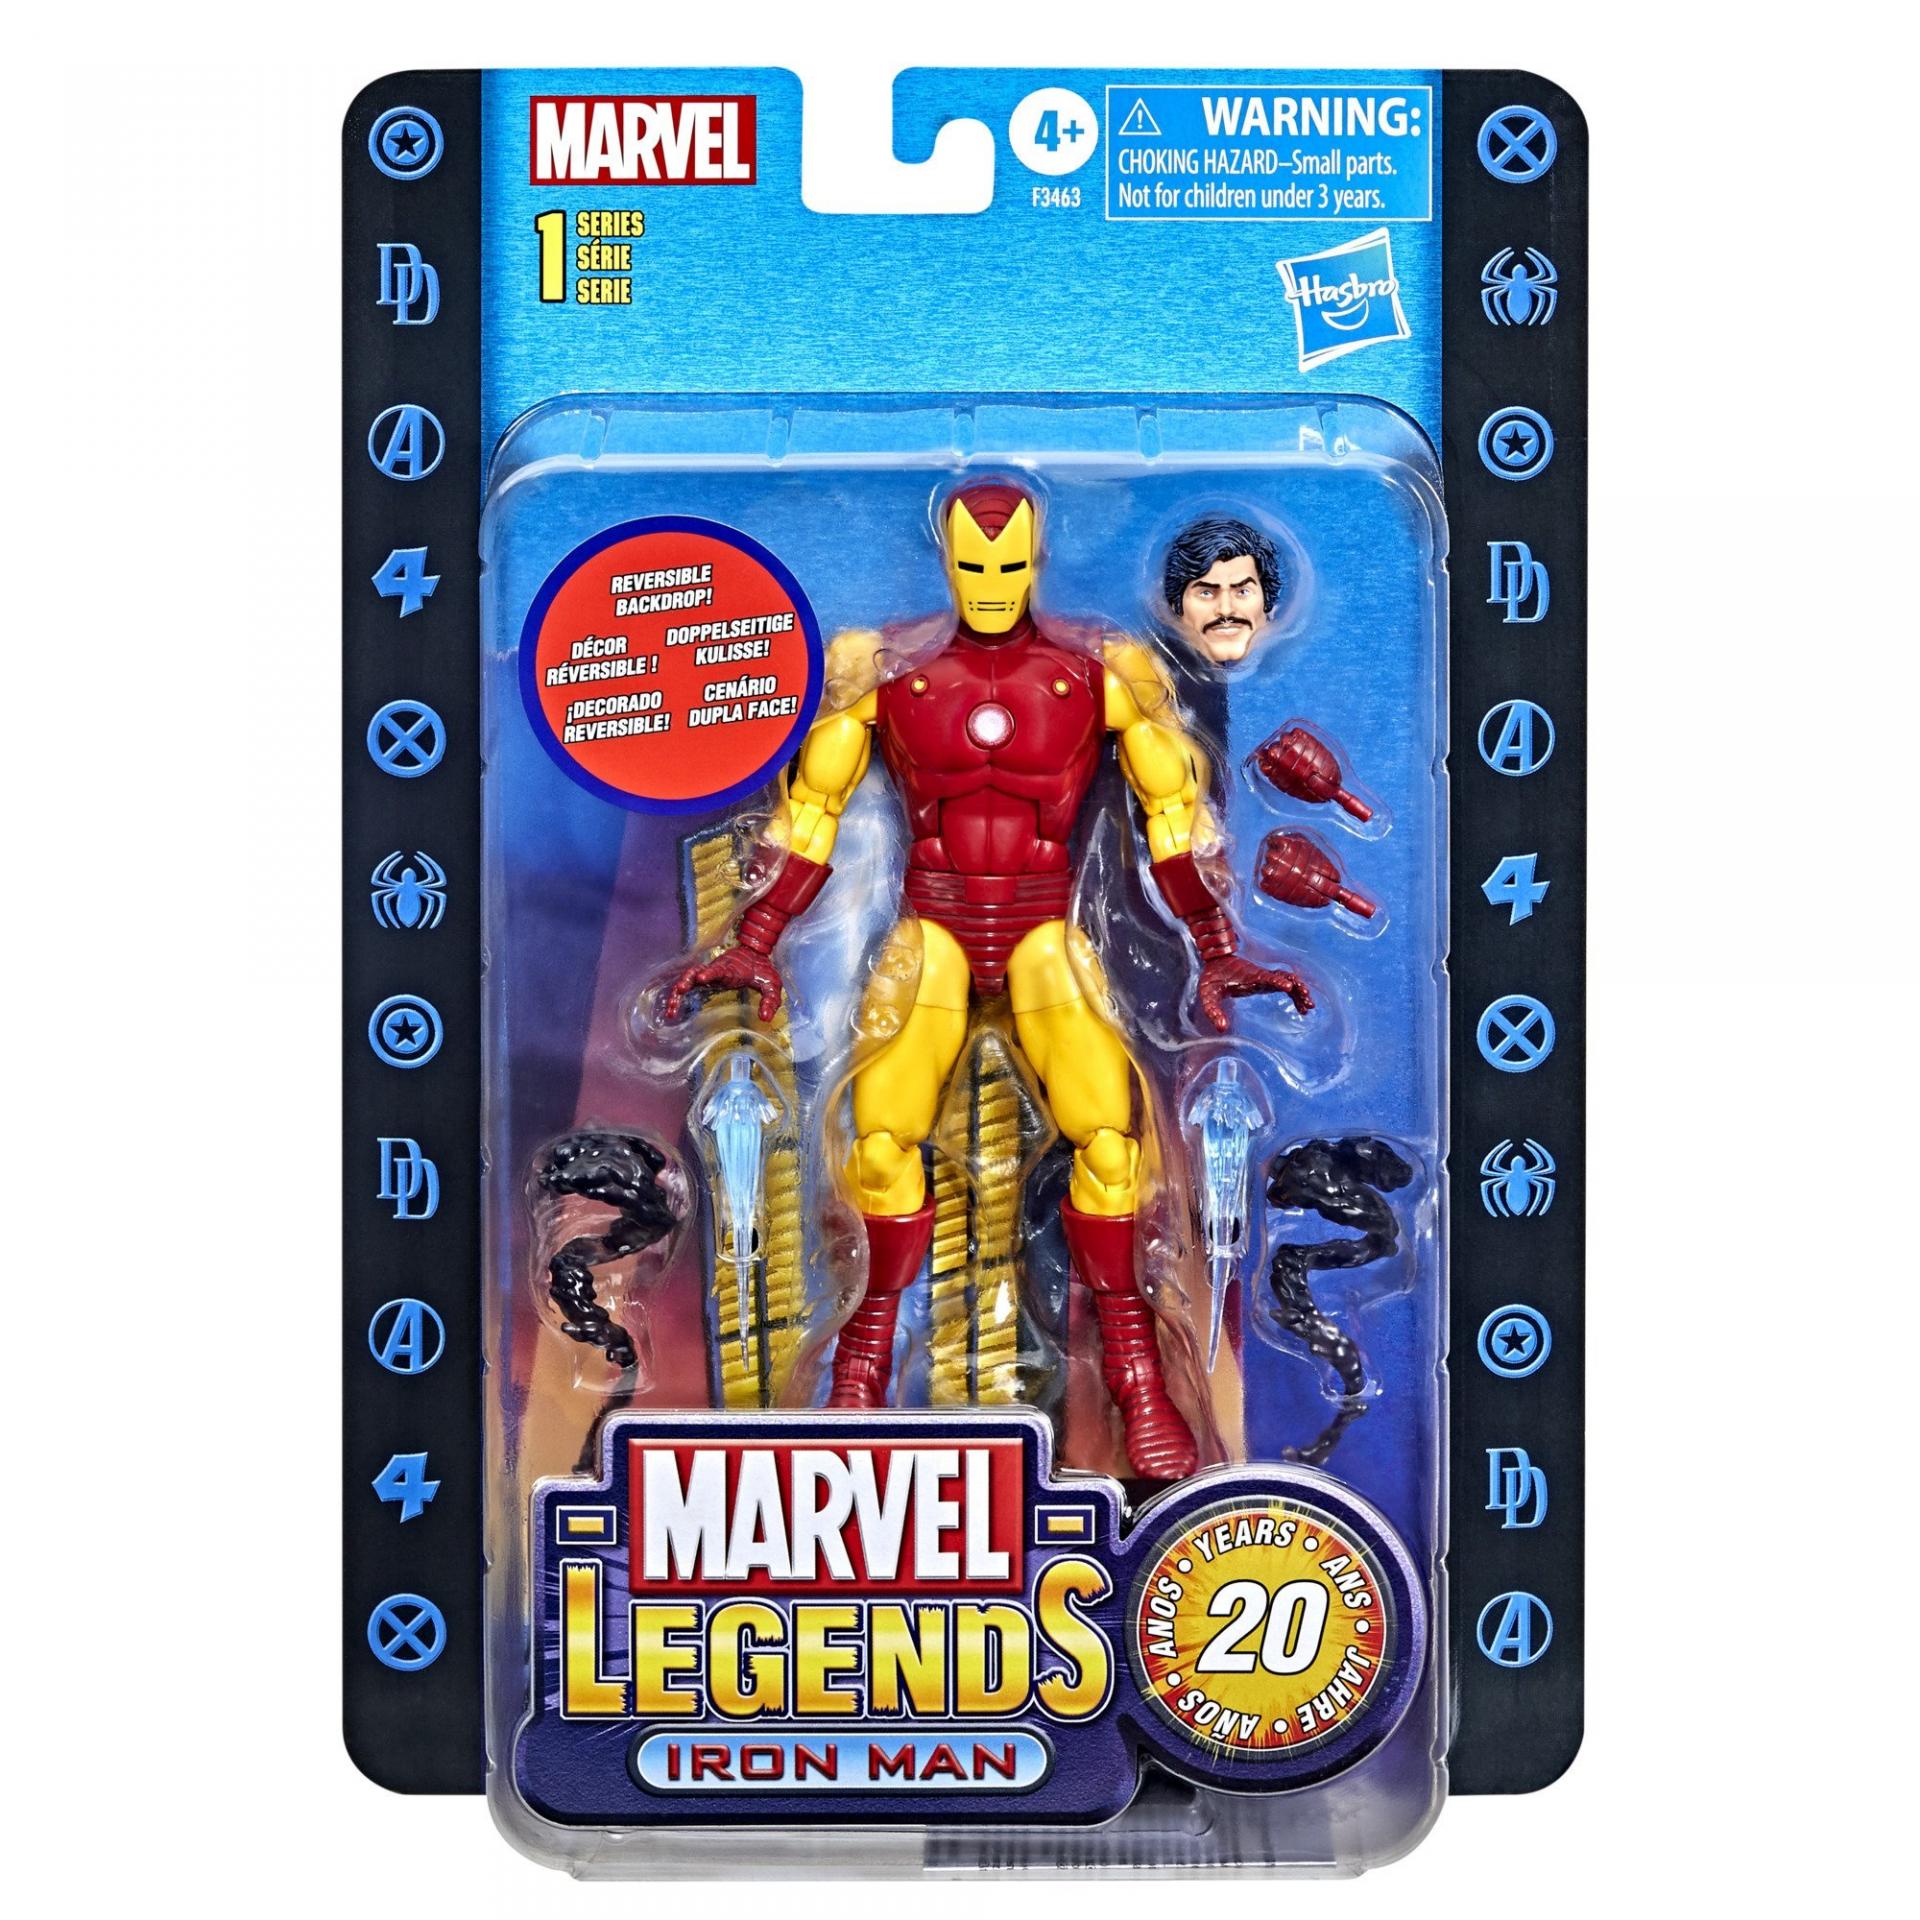 Marvel legends series 1 hasbro iron man16